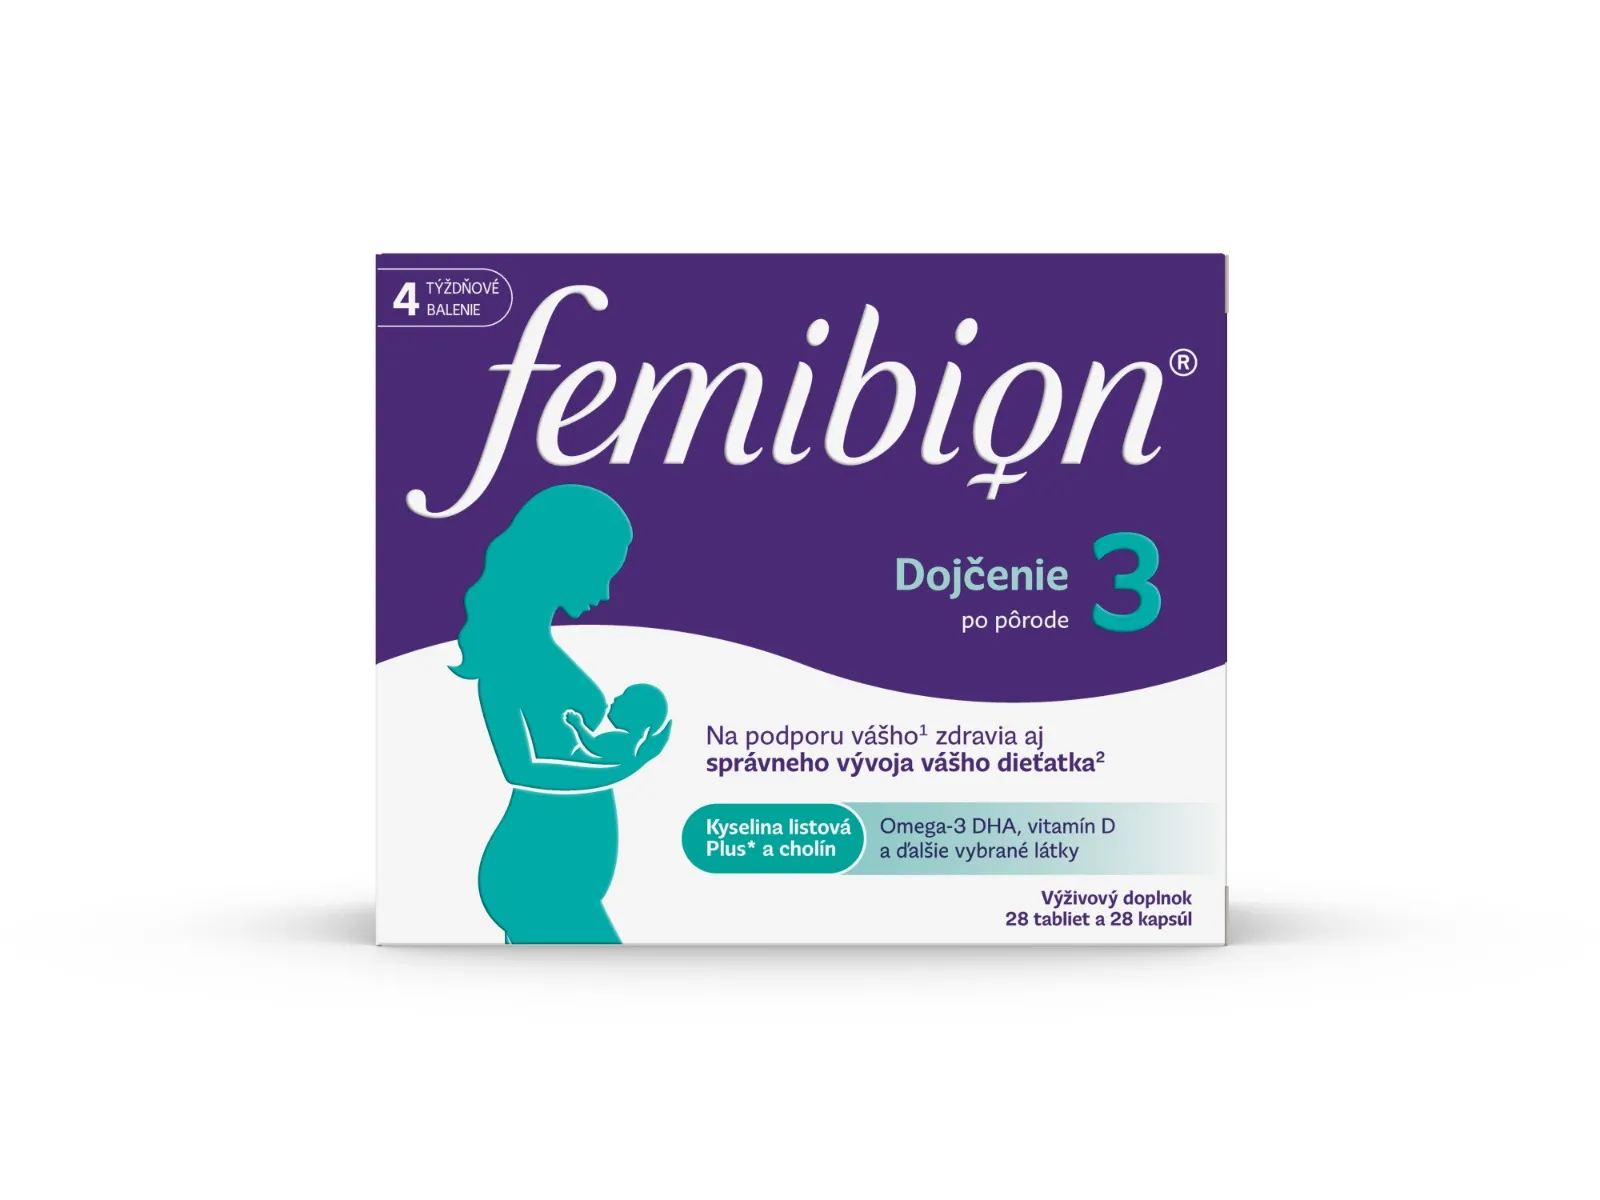 Femibion 3 Dojčenie